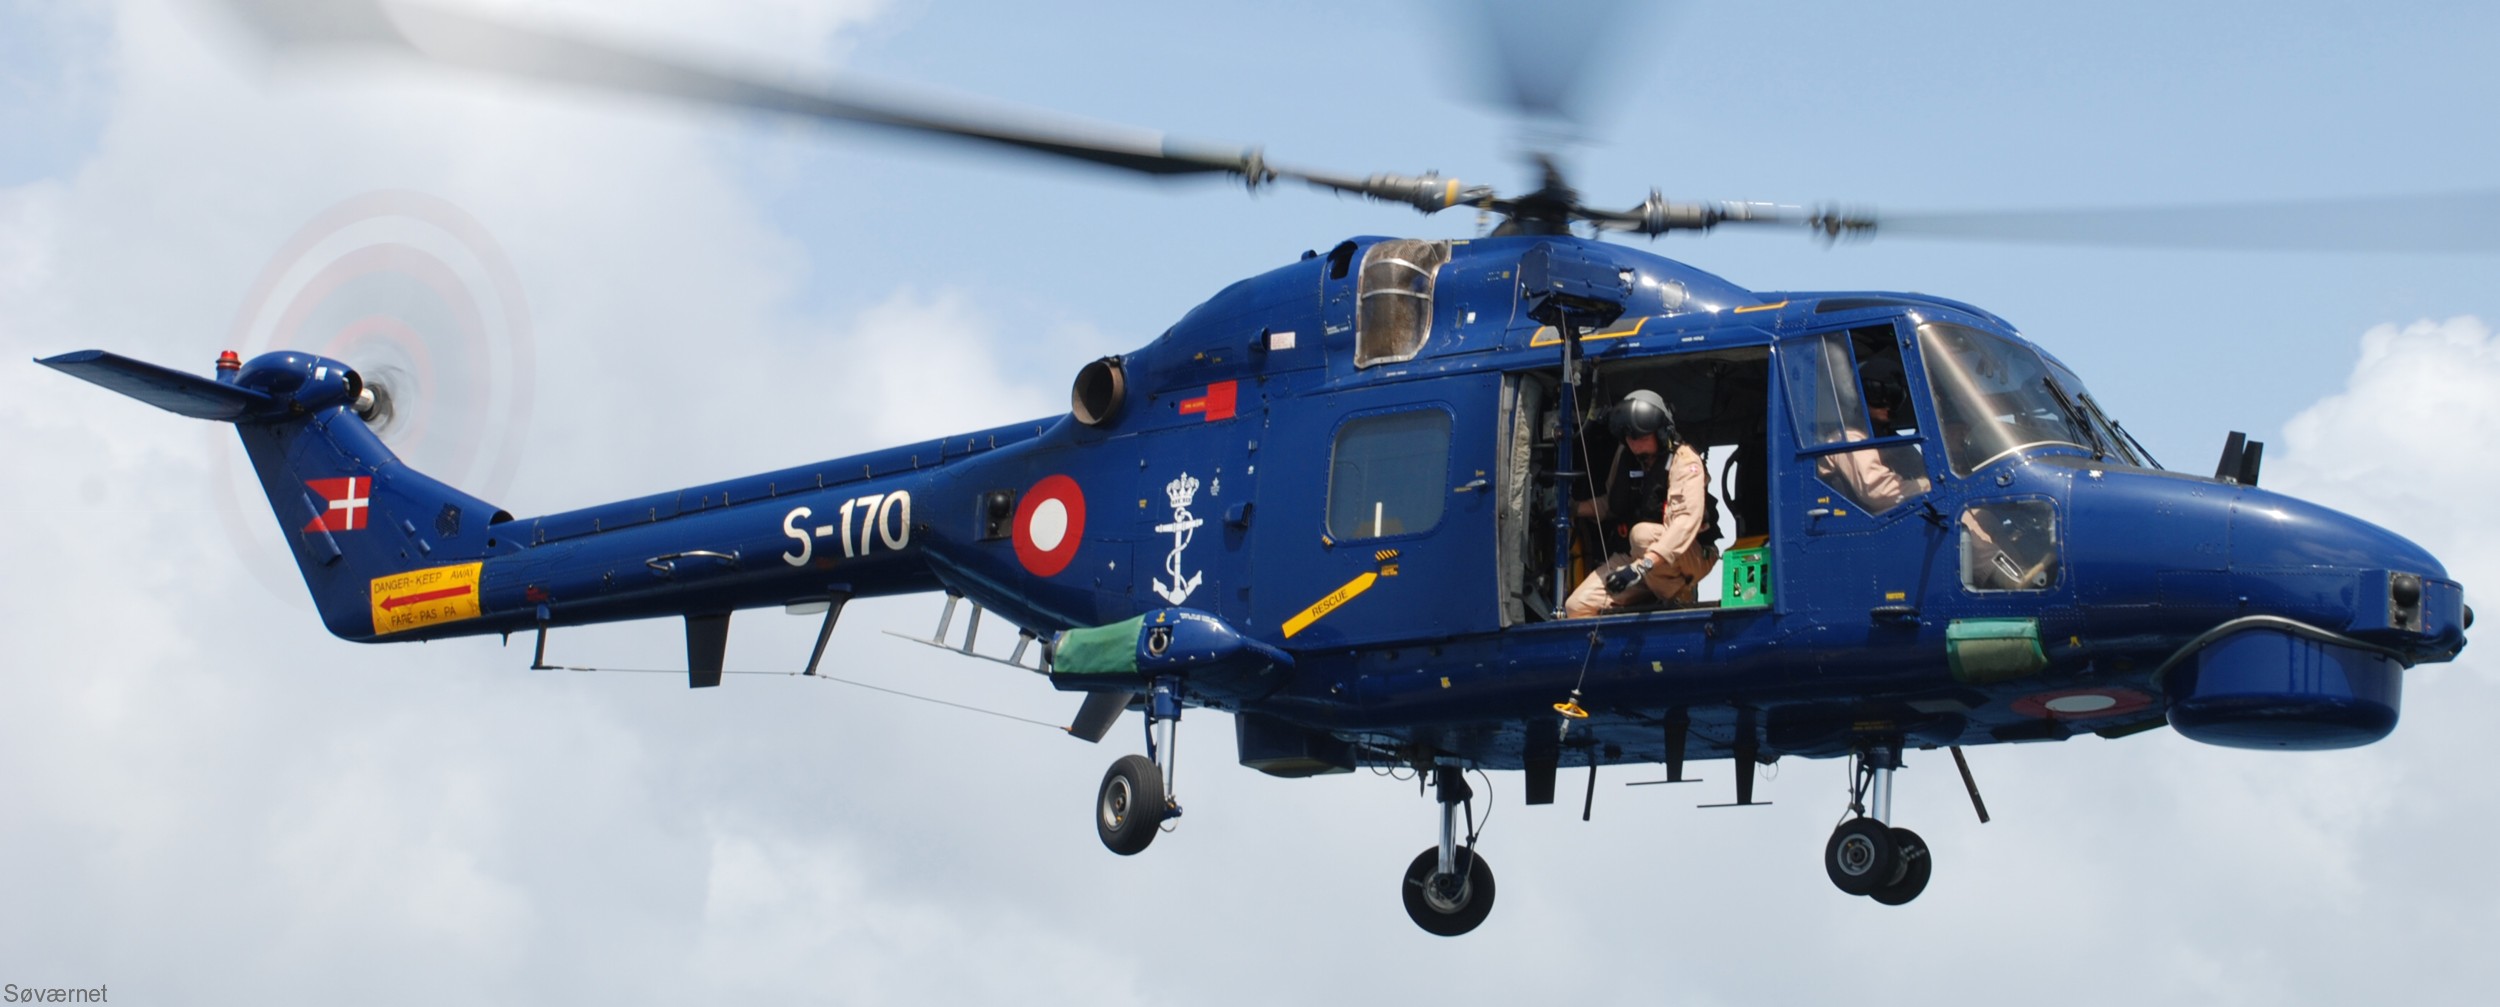 lynx mk.80 mk.90b helicopter westland royal danish navy air force kongelige danske marine flyvevabnet s-170 22